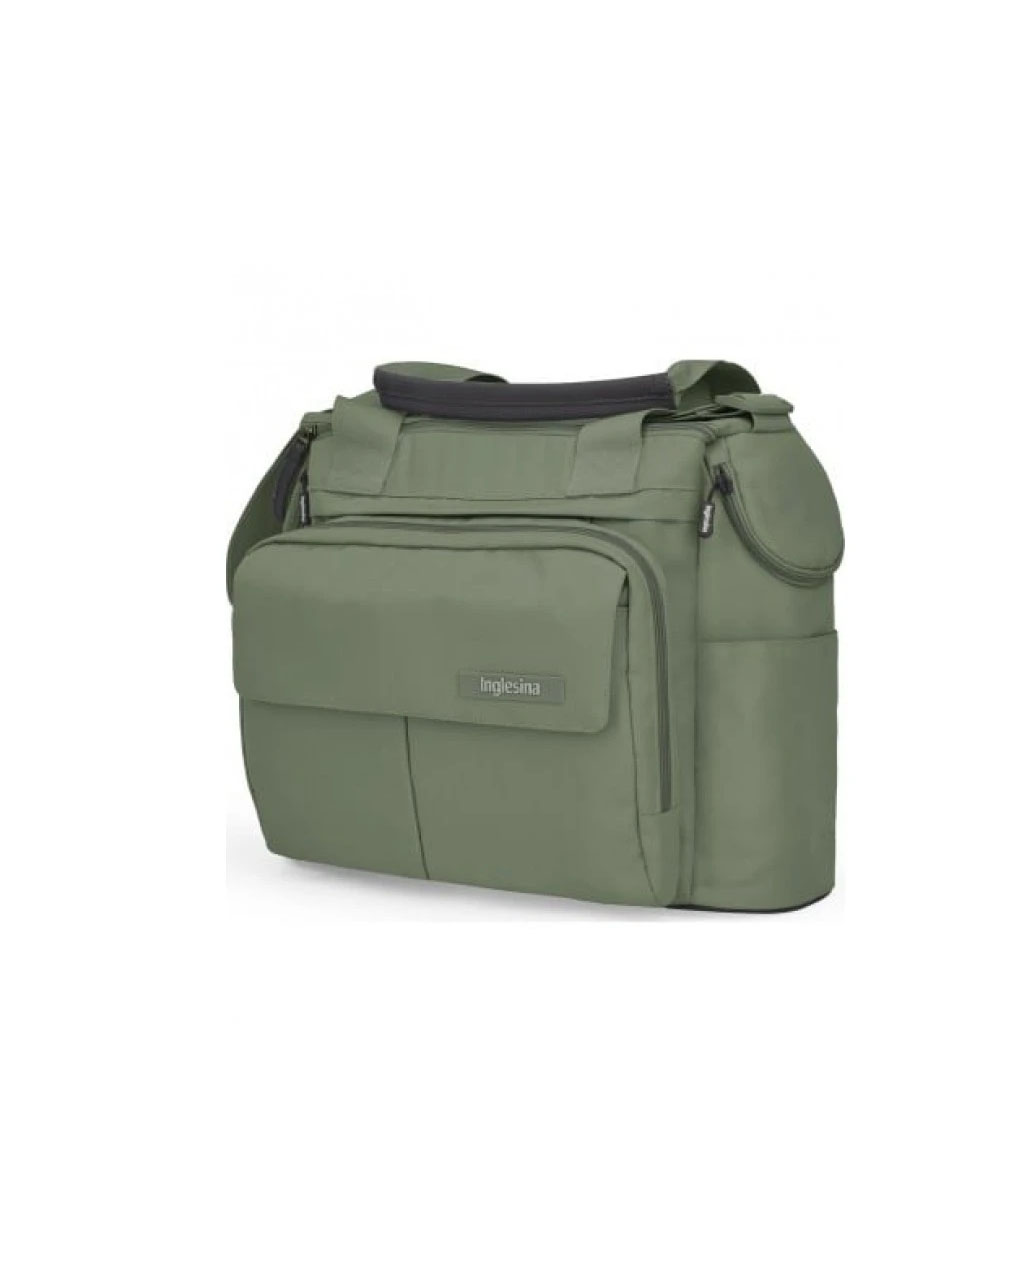 Inglesina τσάντα-αλλαξιέρα dual bag electa tribeca green